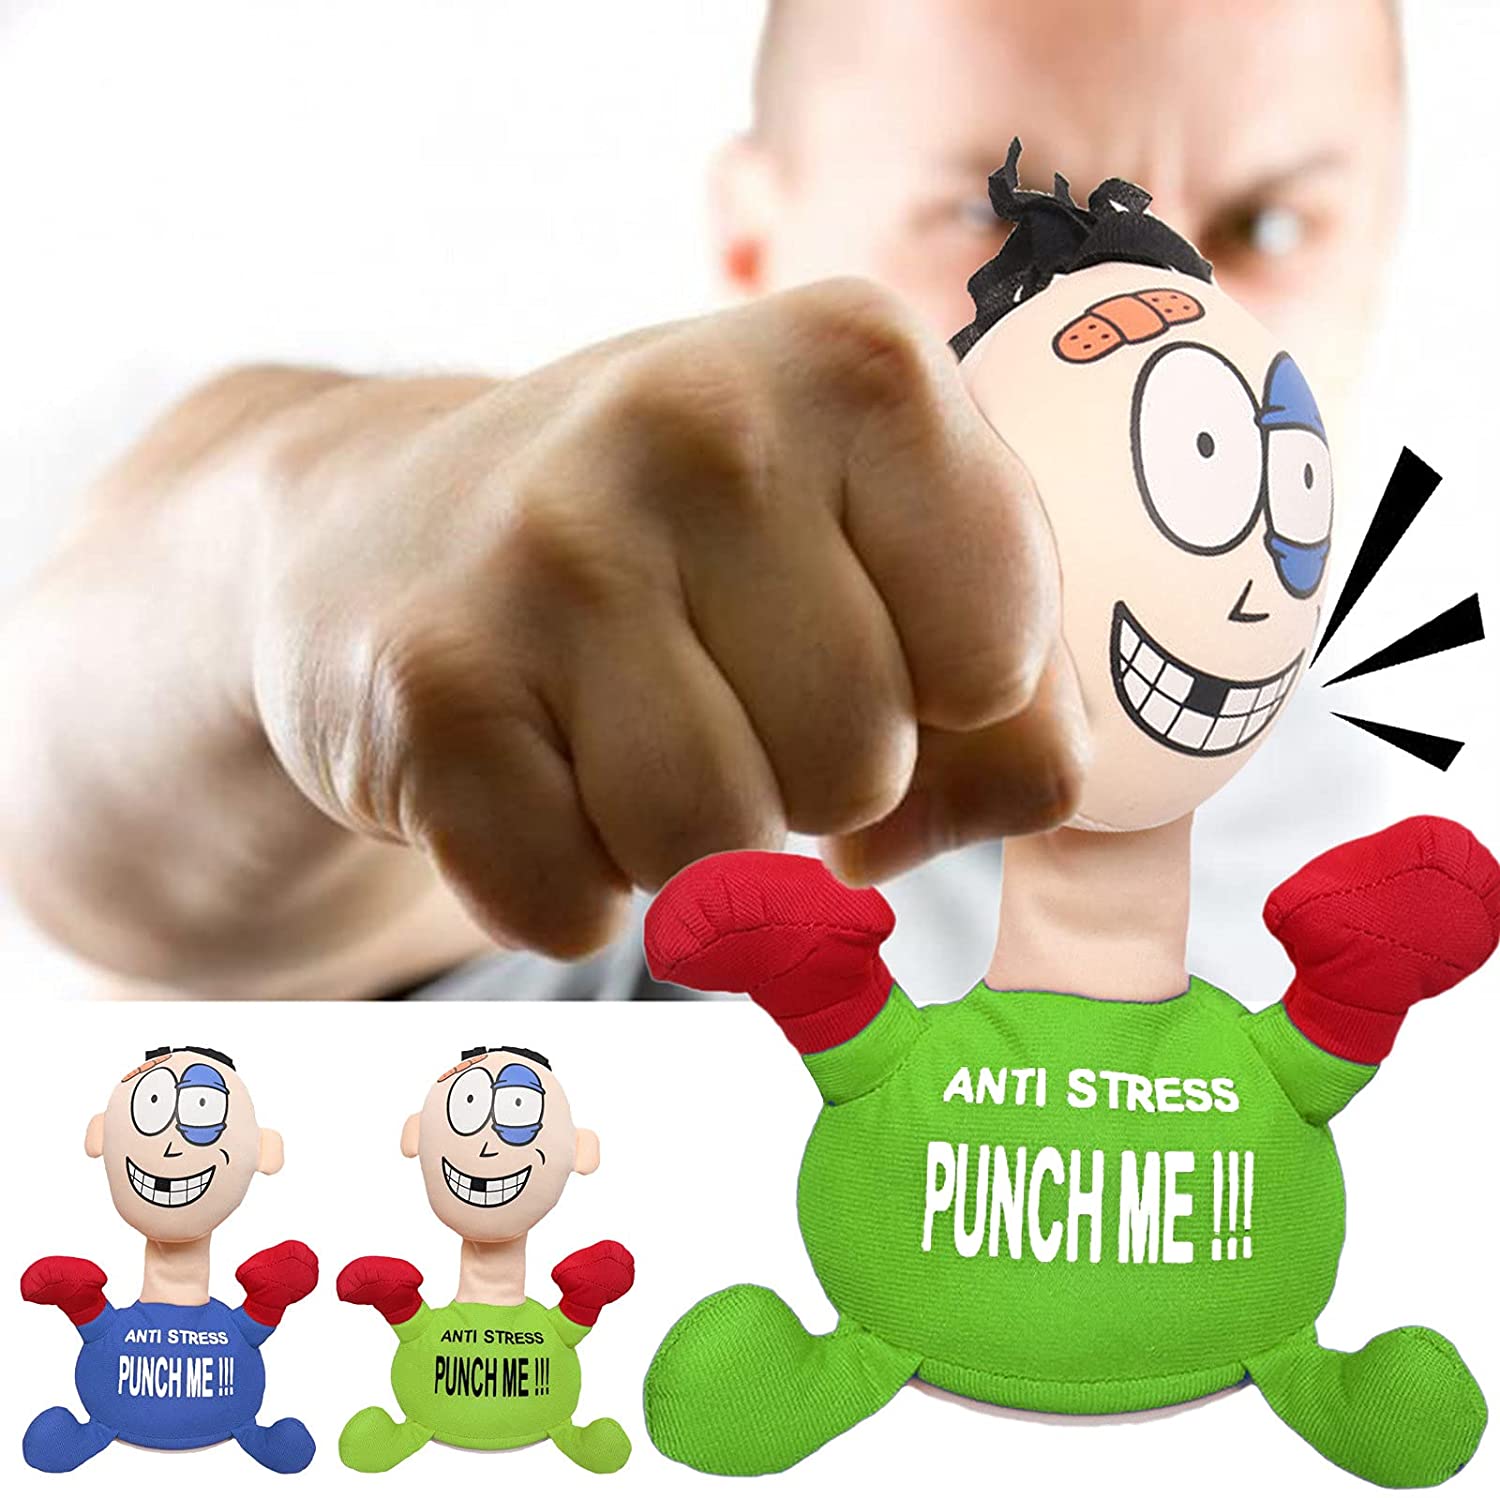 Anti Stress Punch Me!!!